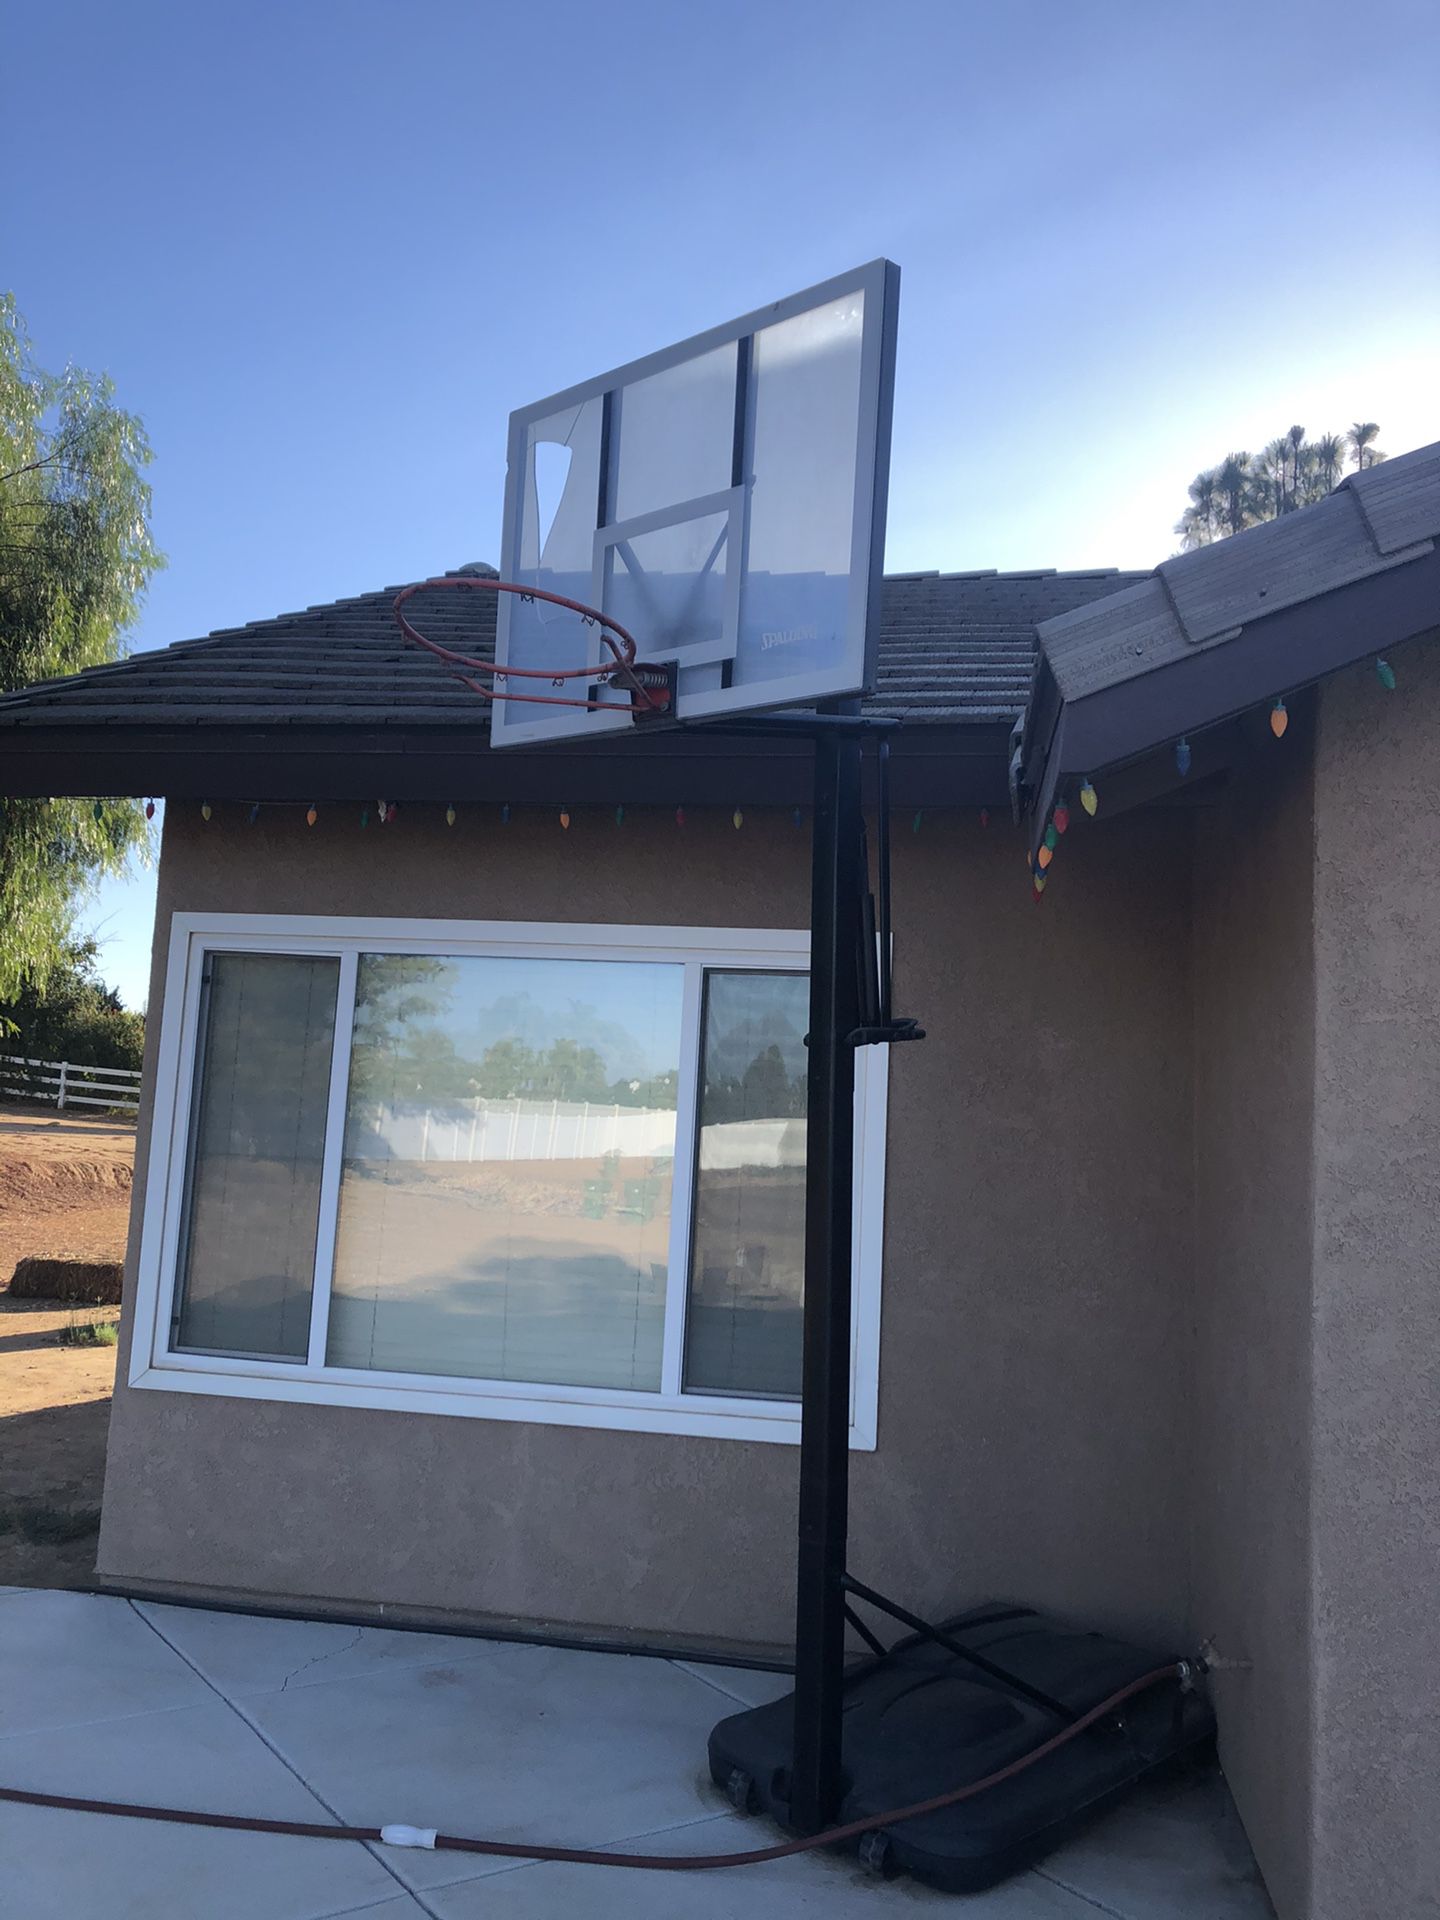 Basketball hoop $40